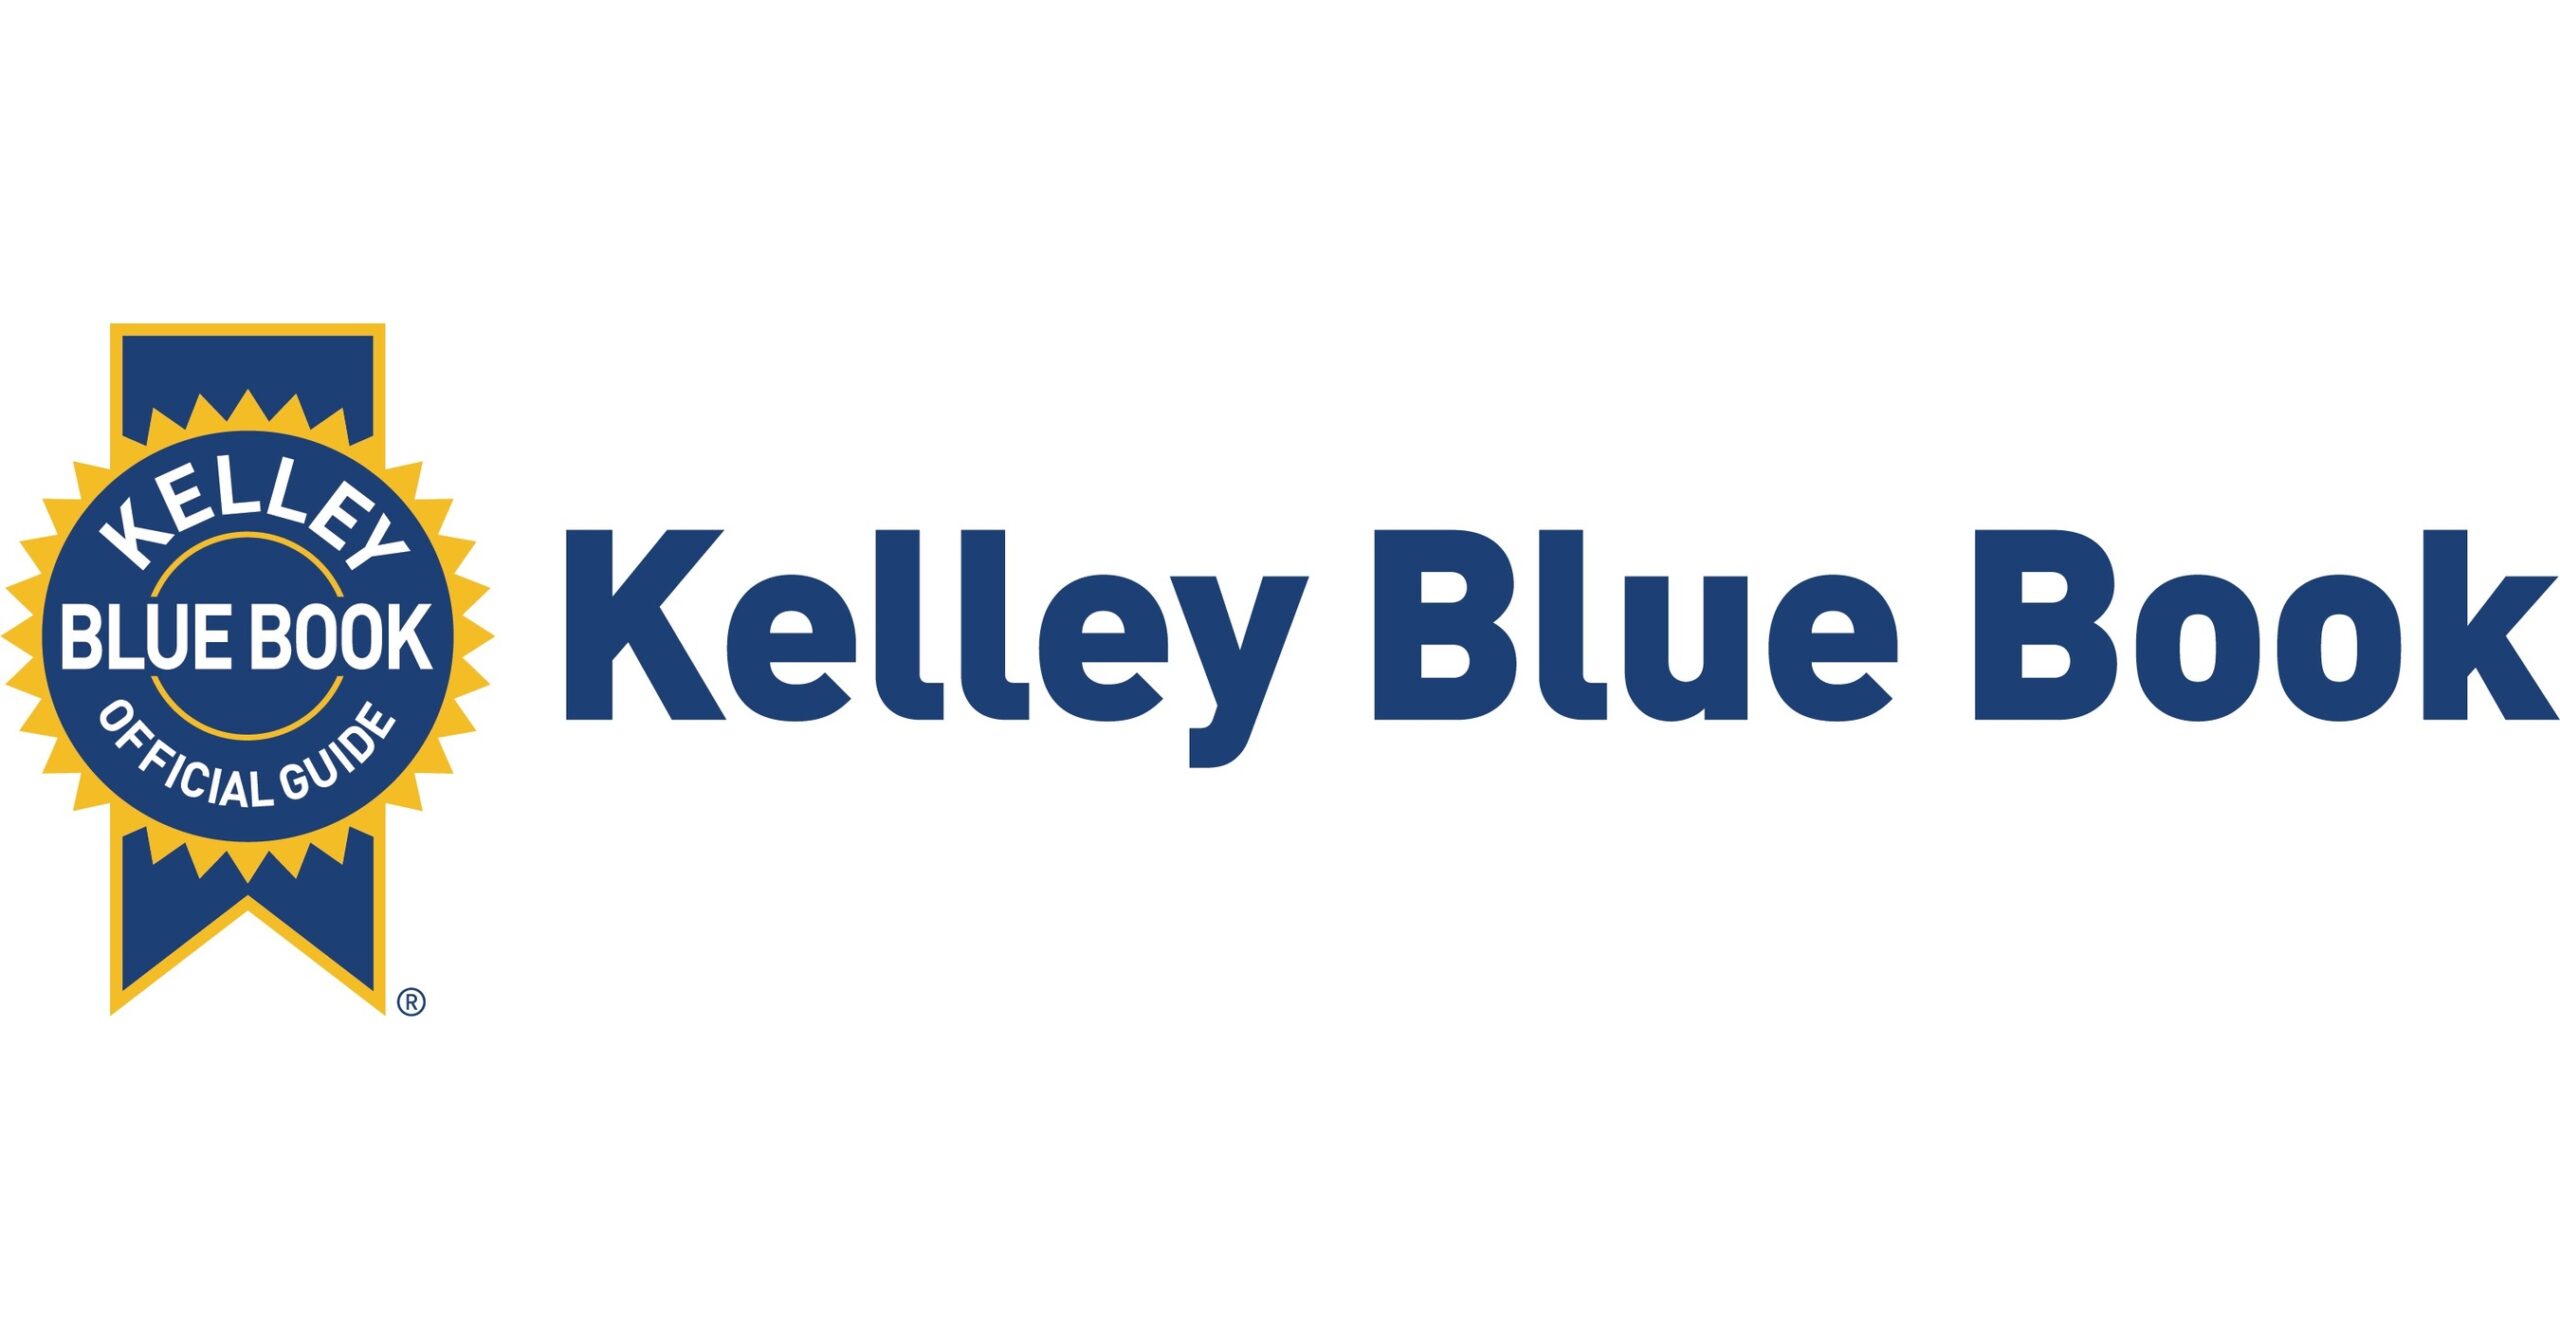 Kelly blue book